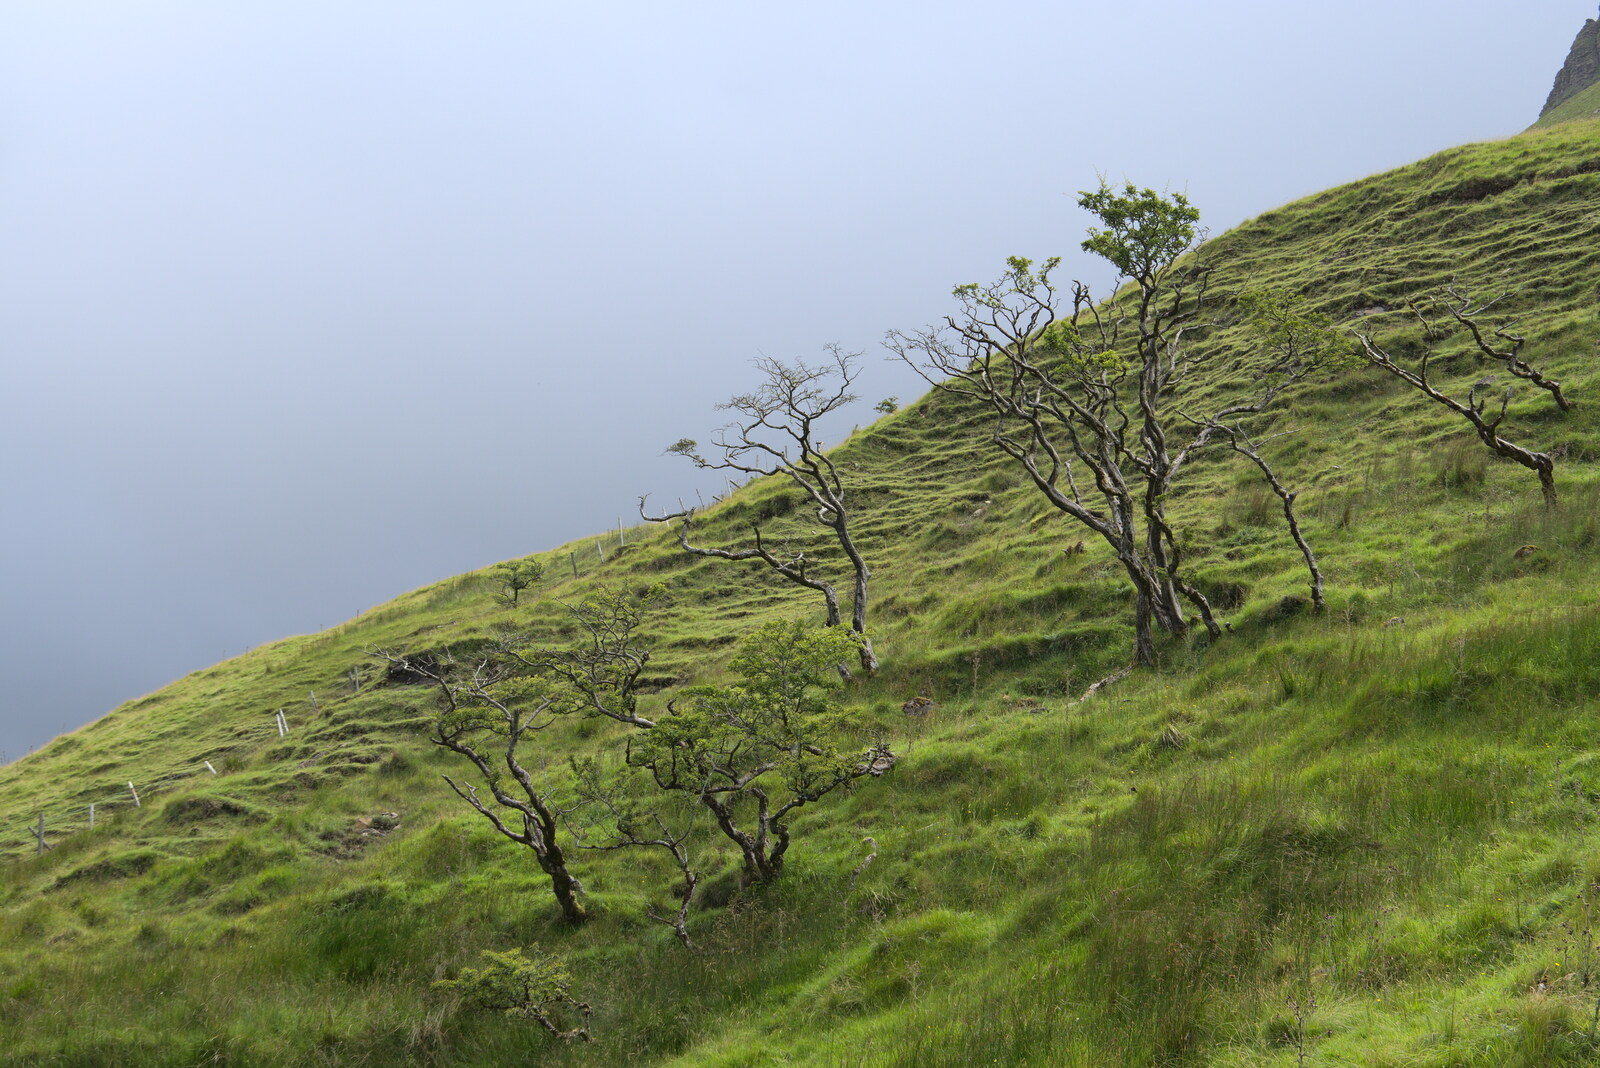 Trees on the hillside from Walks Around Benbulben and Carrowmore, County Sligo, Ireland - 13th August 2021